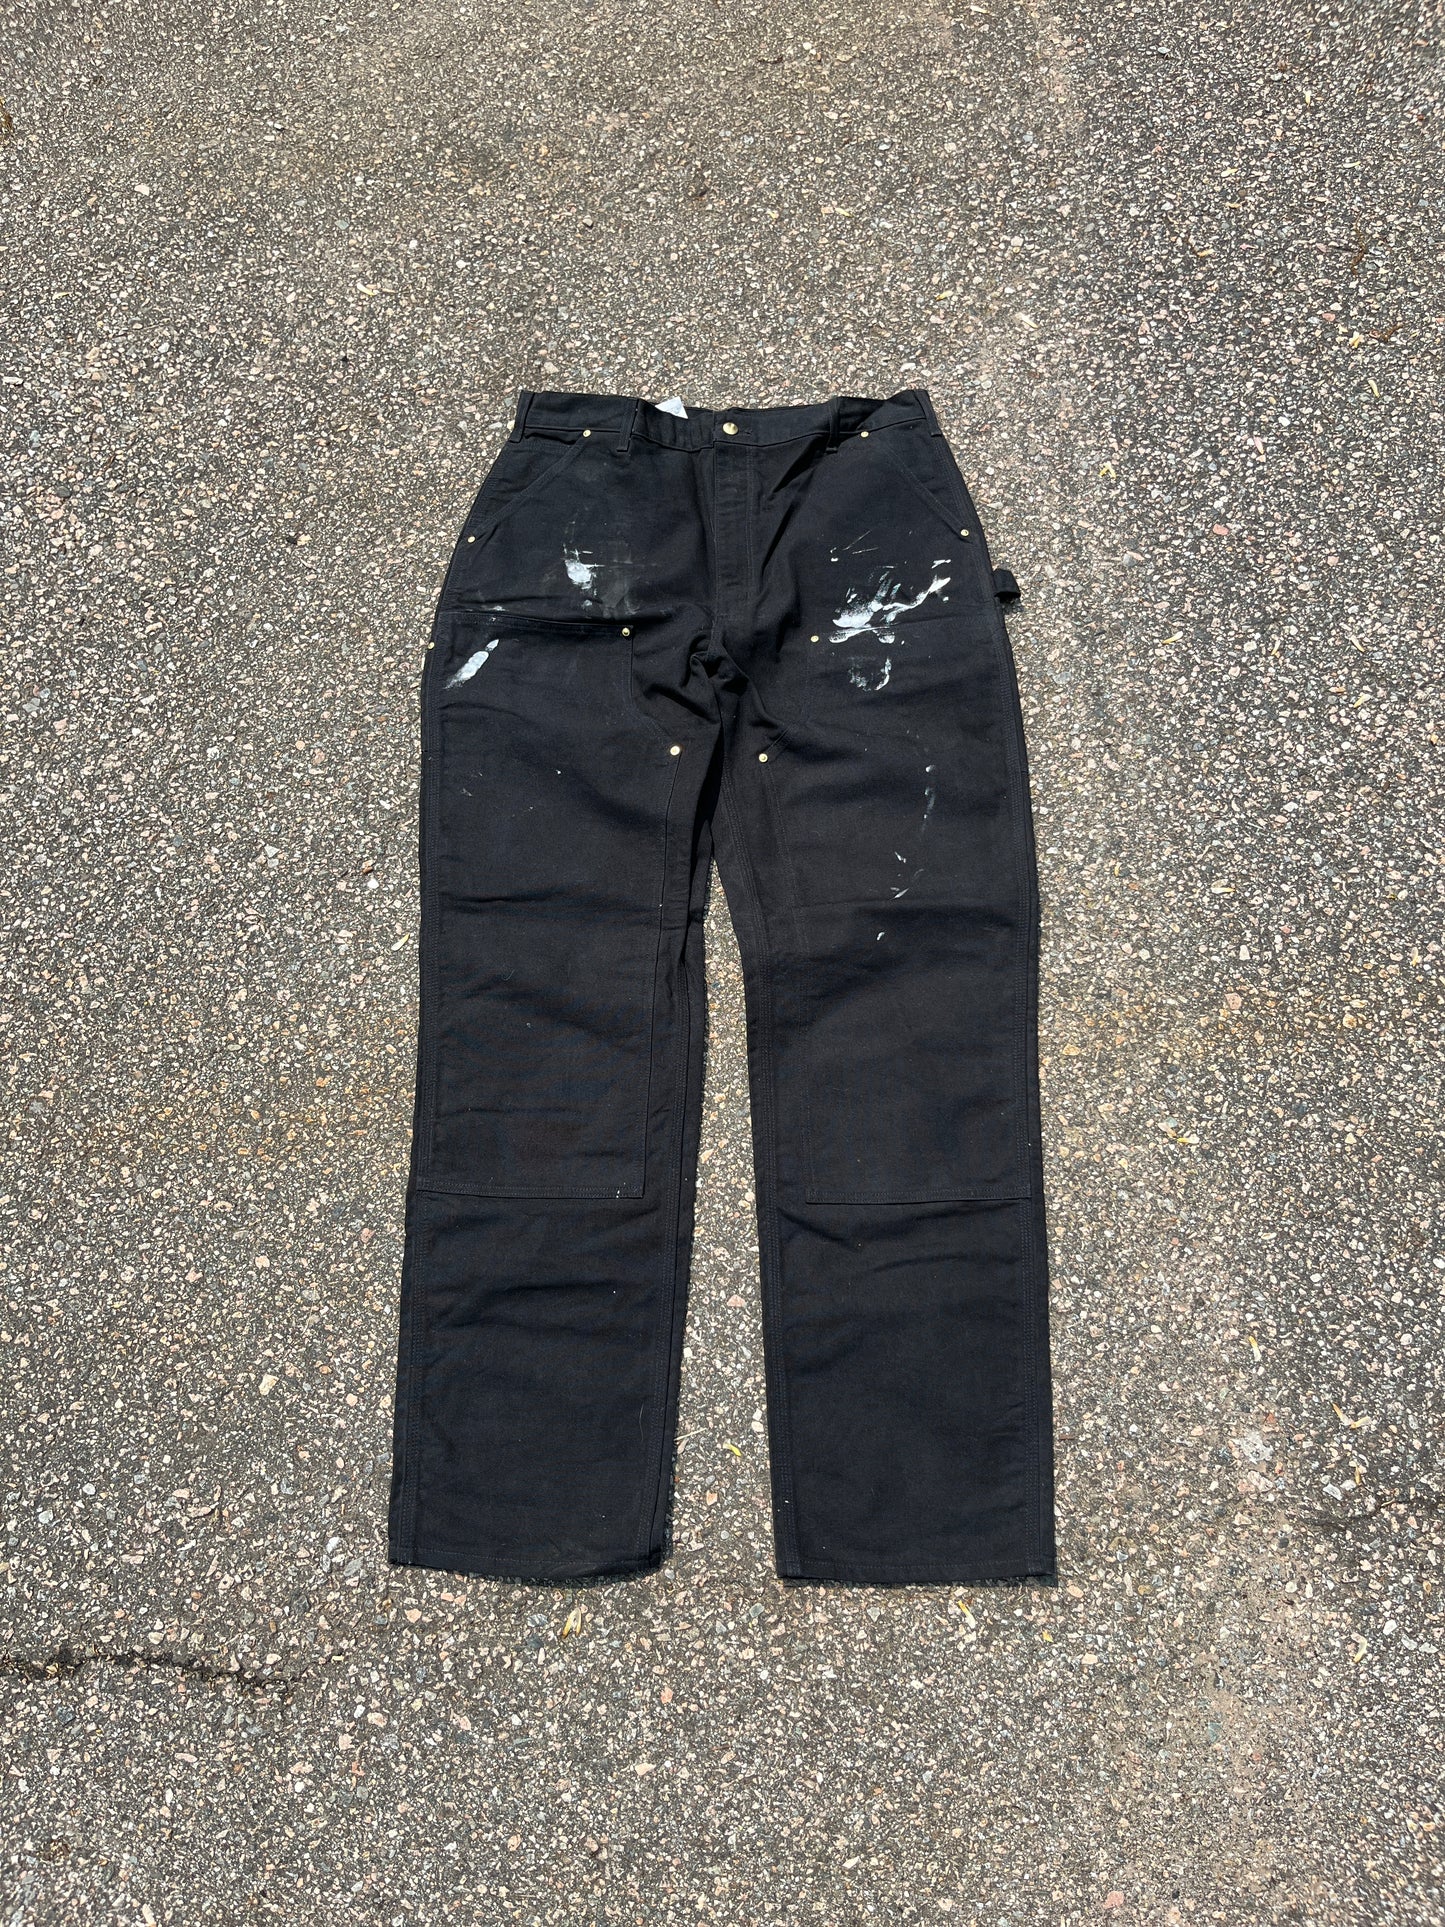 Painted Black Carhartt Double Knee Pants - 36 x 34